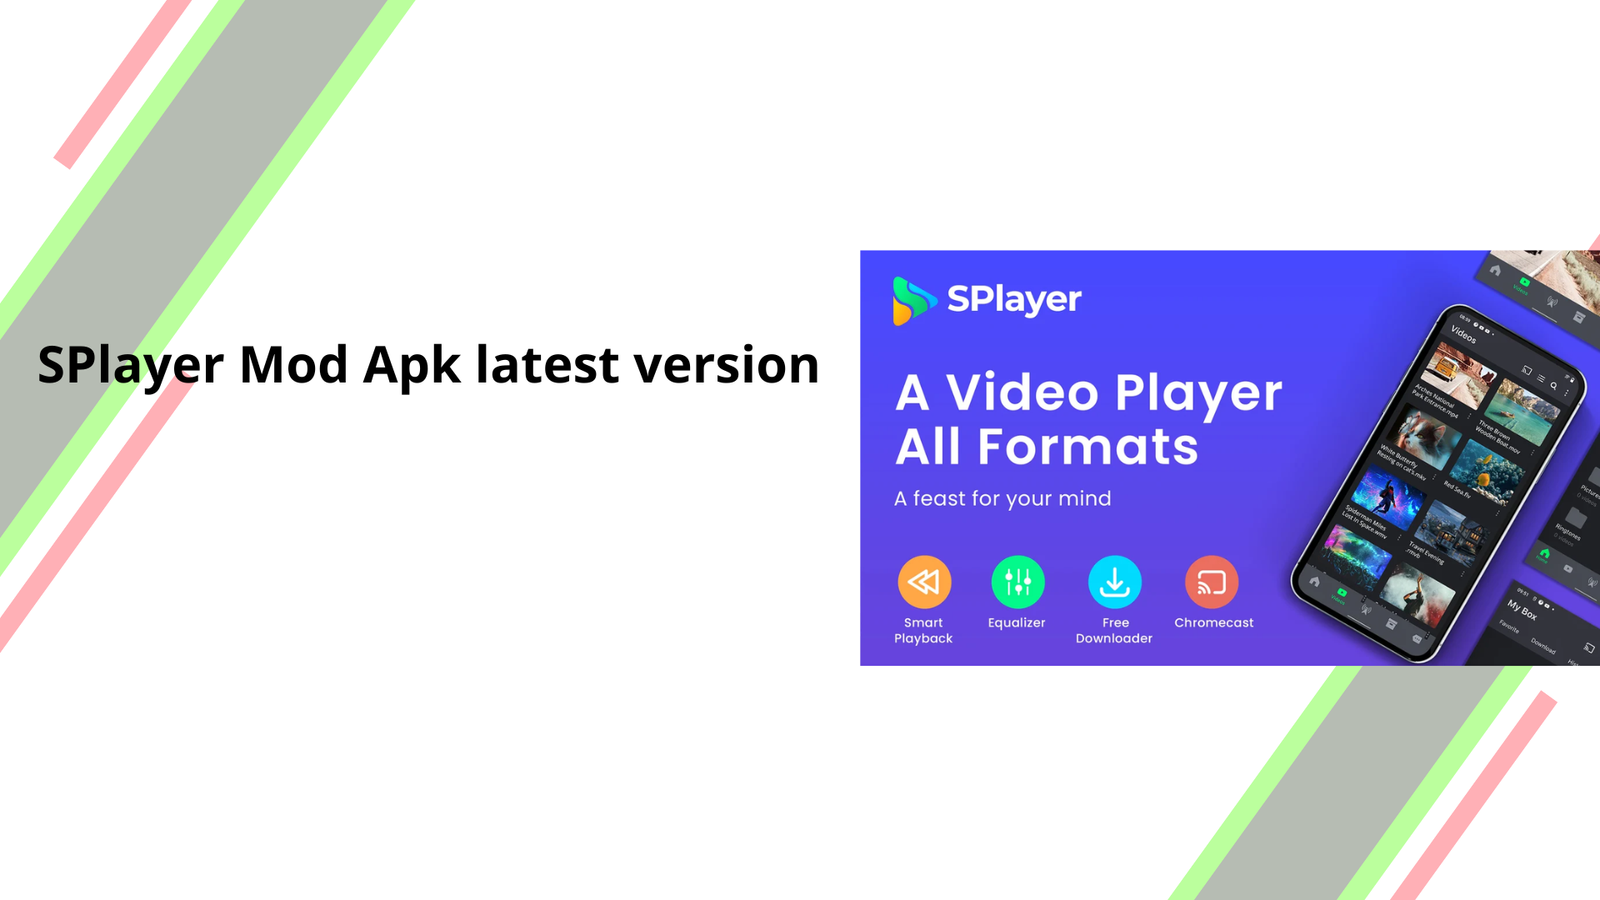 splayer mod apk latest version